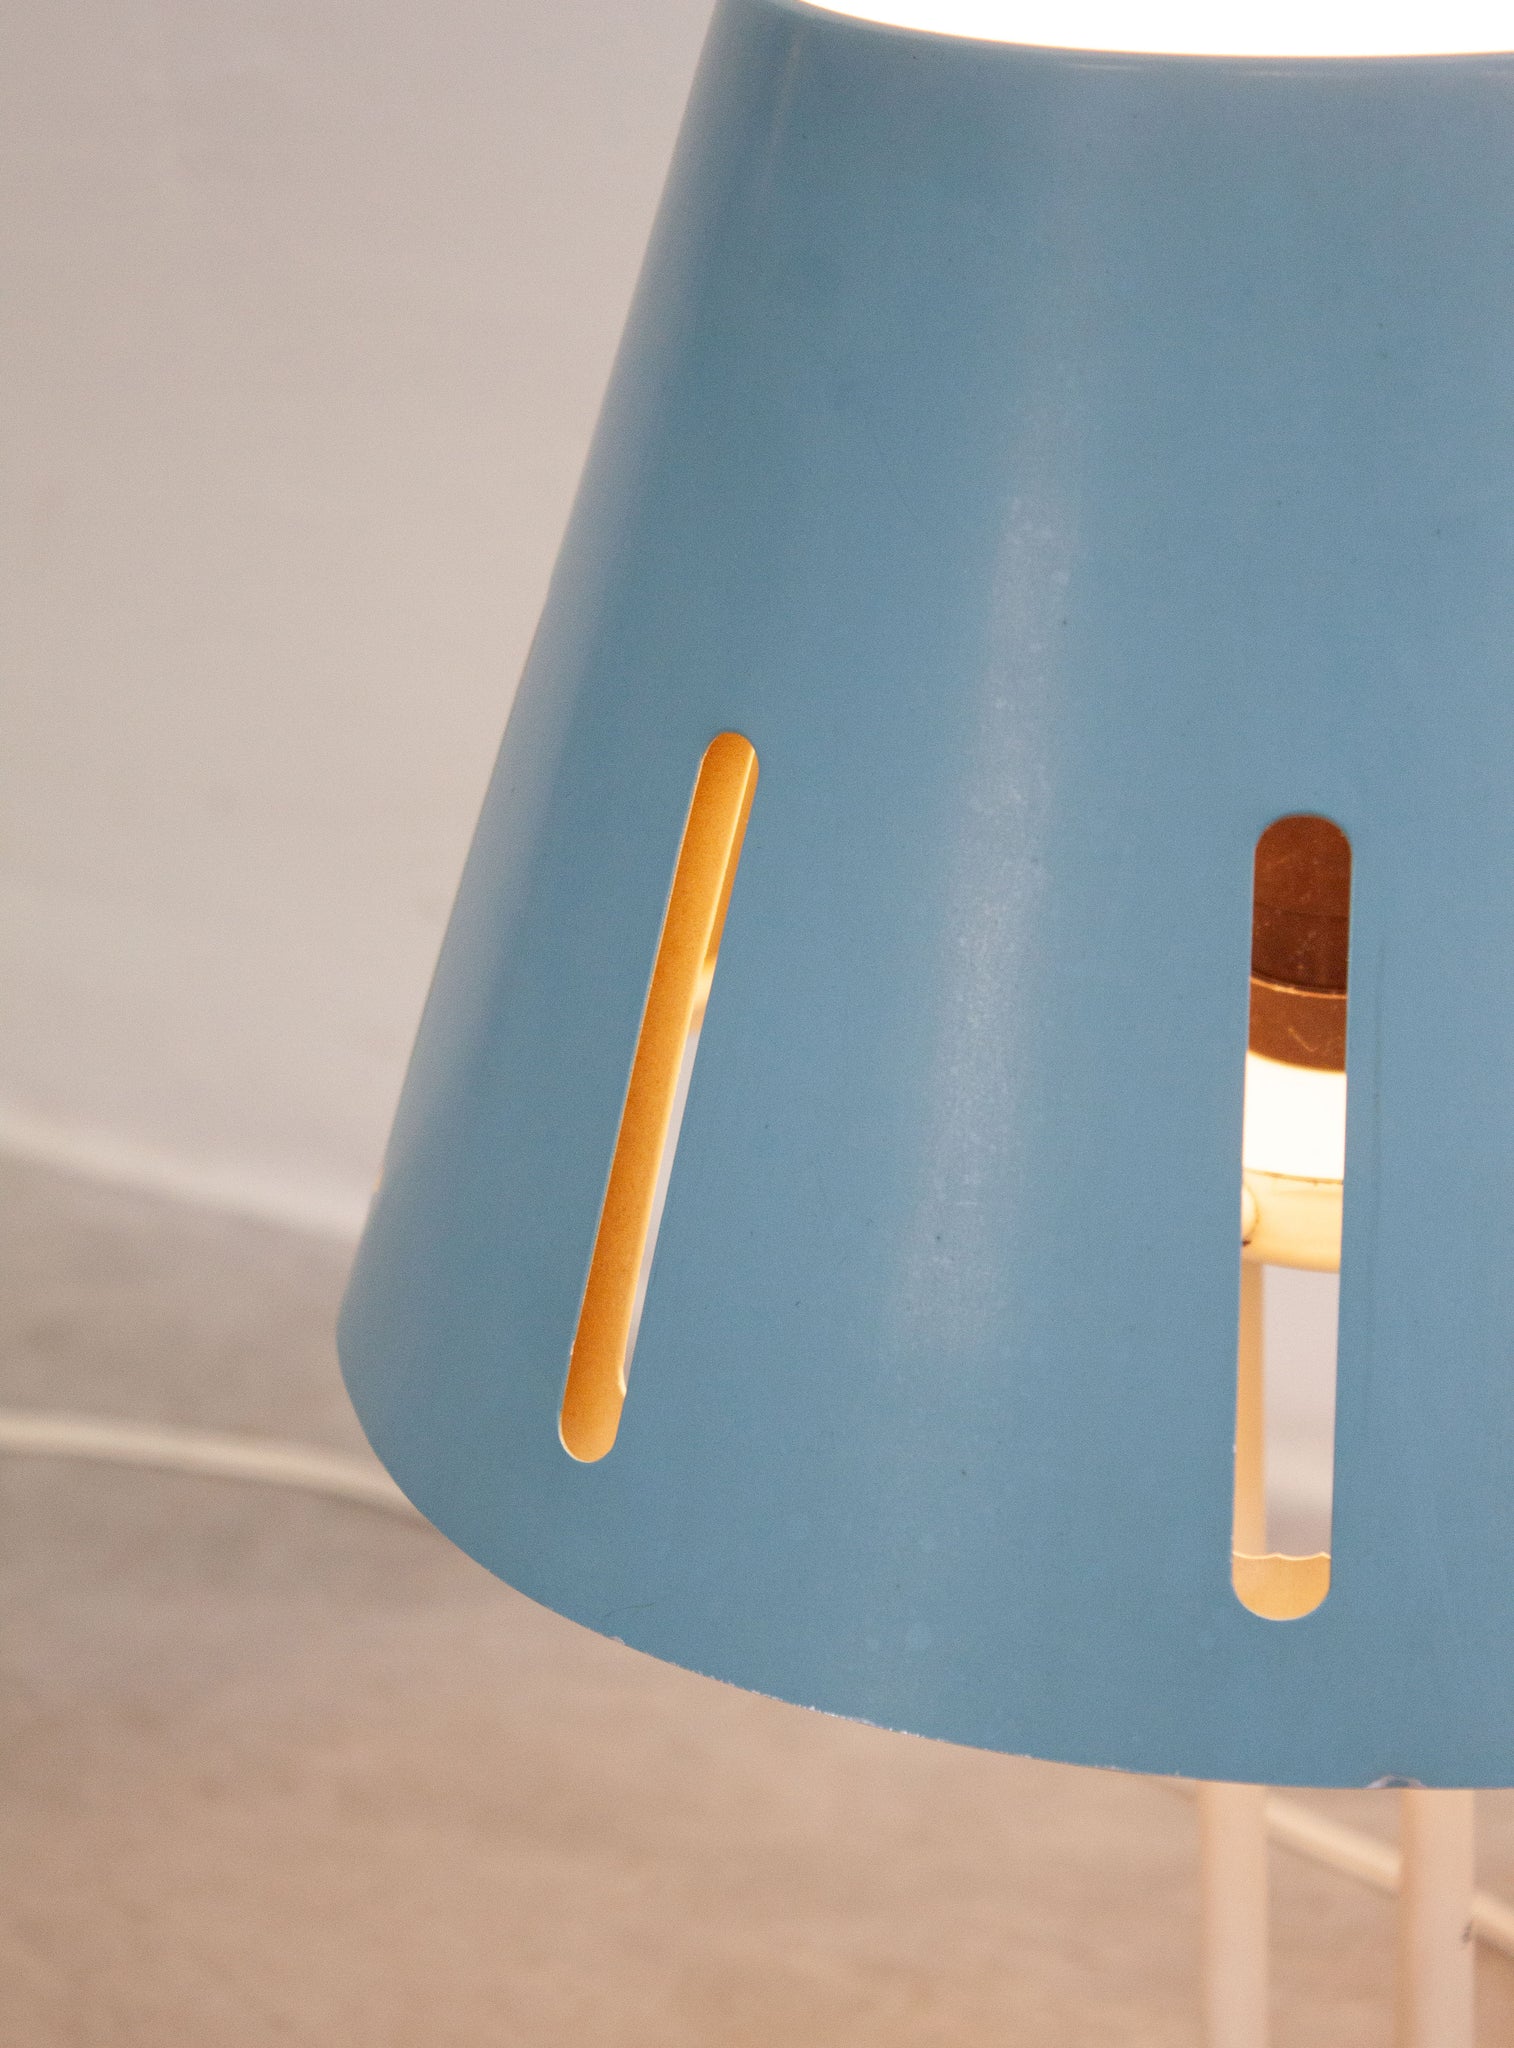 Hala 'Zonneserie' Model 9 Desk Lamp by H. Busquet (Light Blue)